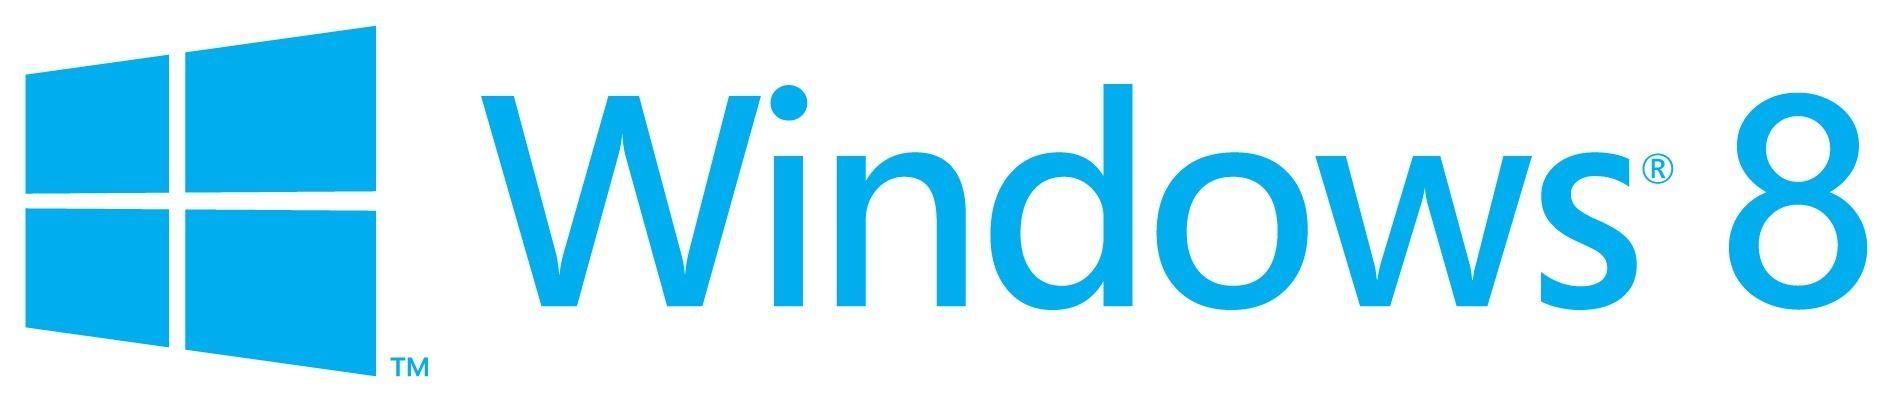 Windows Blue Logo - New Windows 8 Logo Is Pure Genius | PCWorld